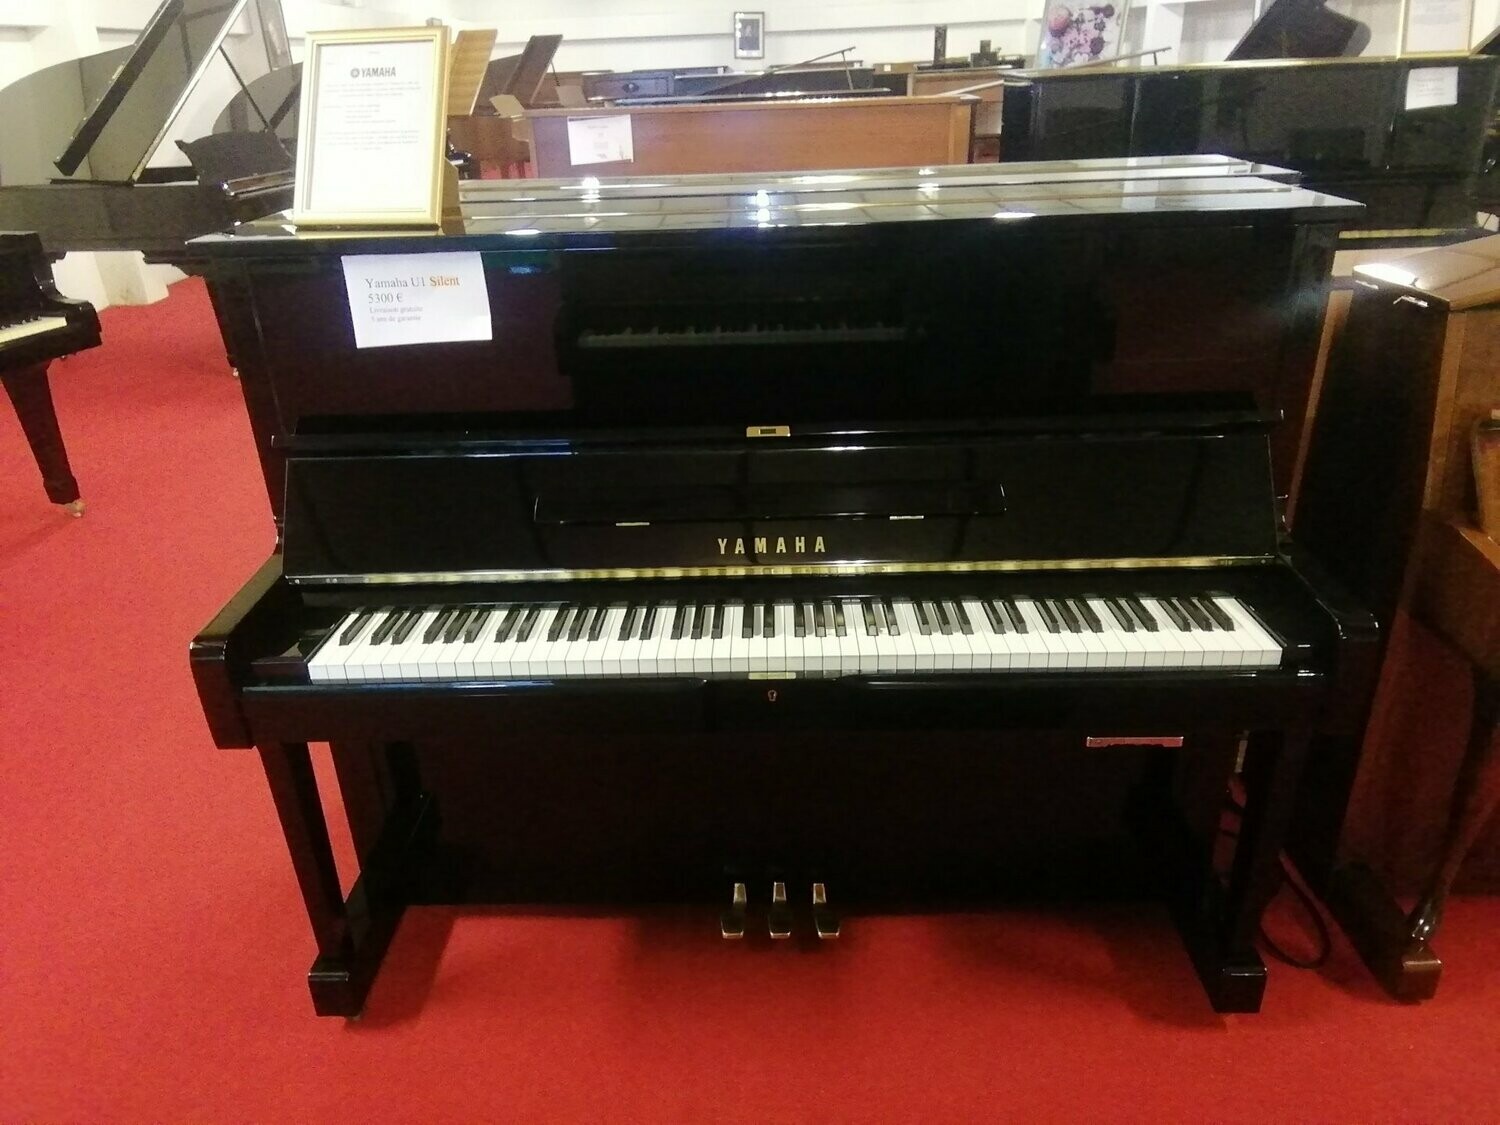 Piano droit Yamaha U1 silent occasion - Magasin à Massy